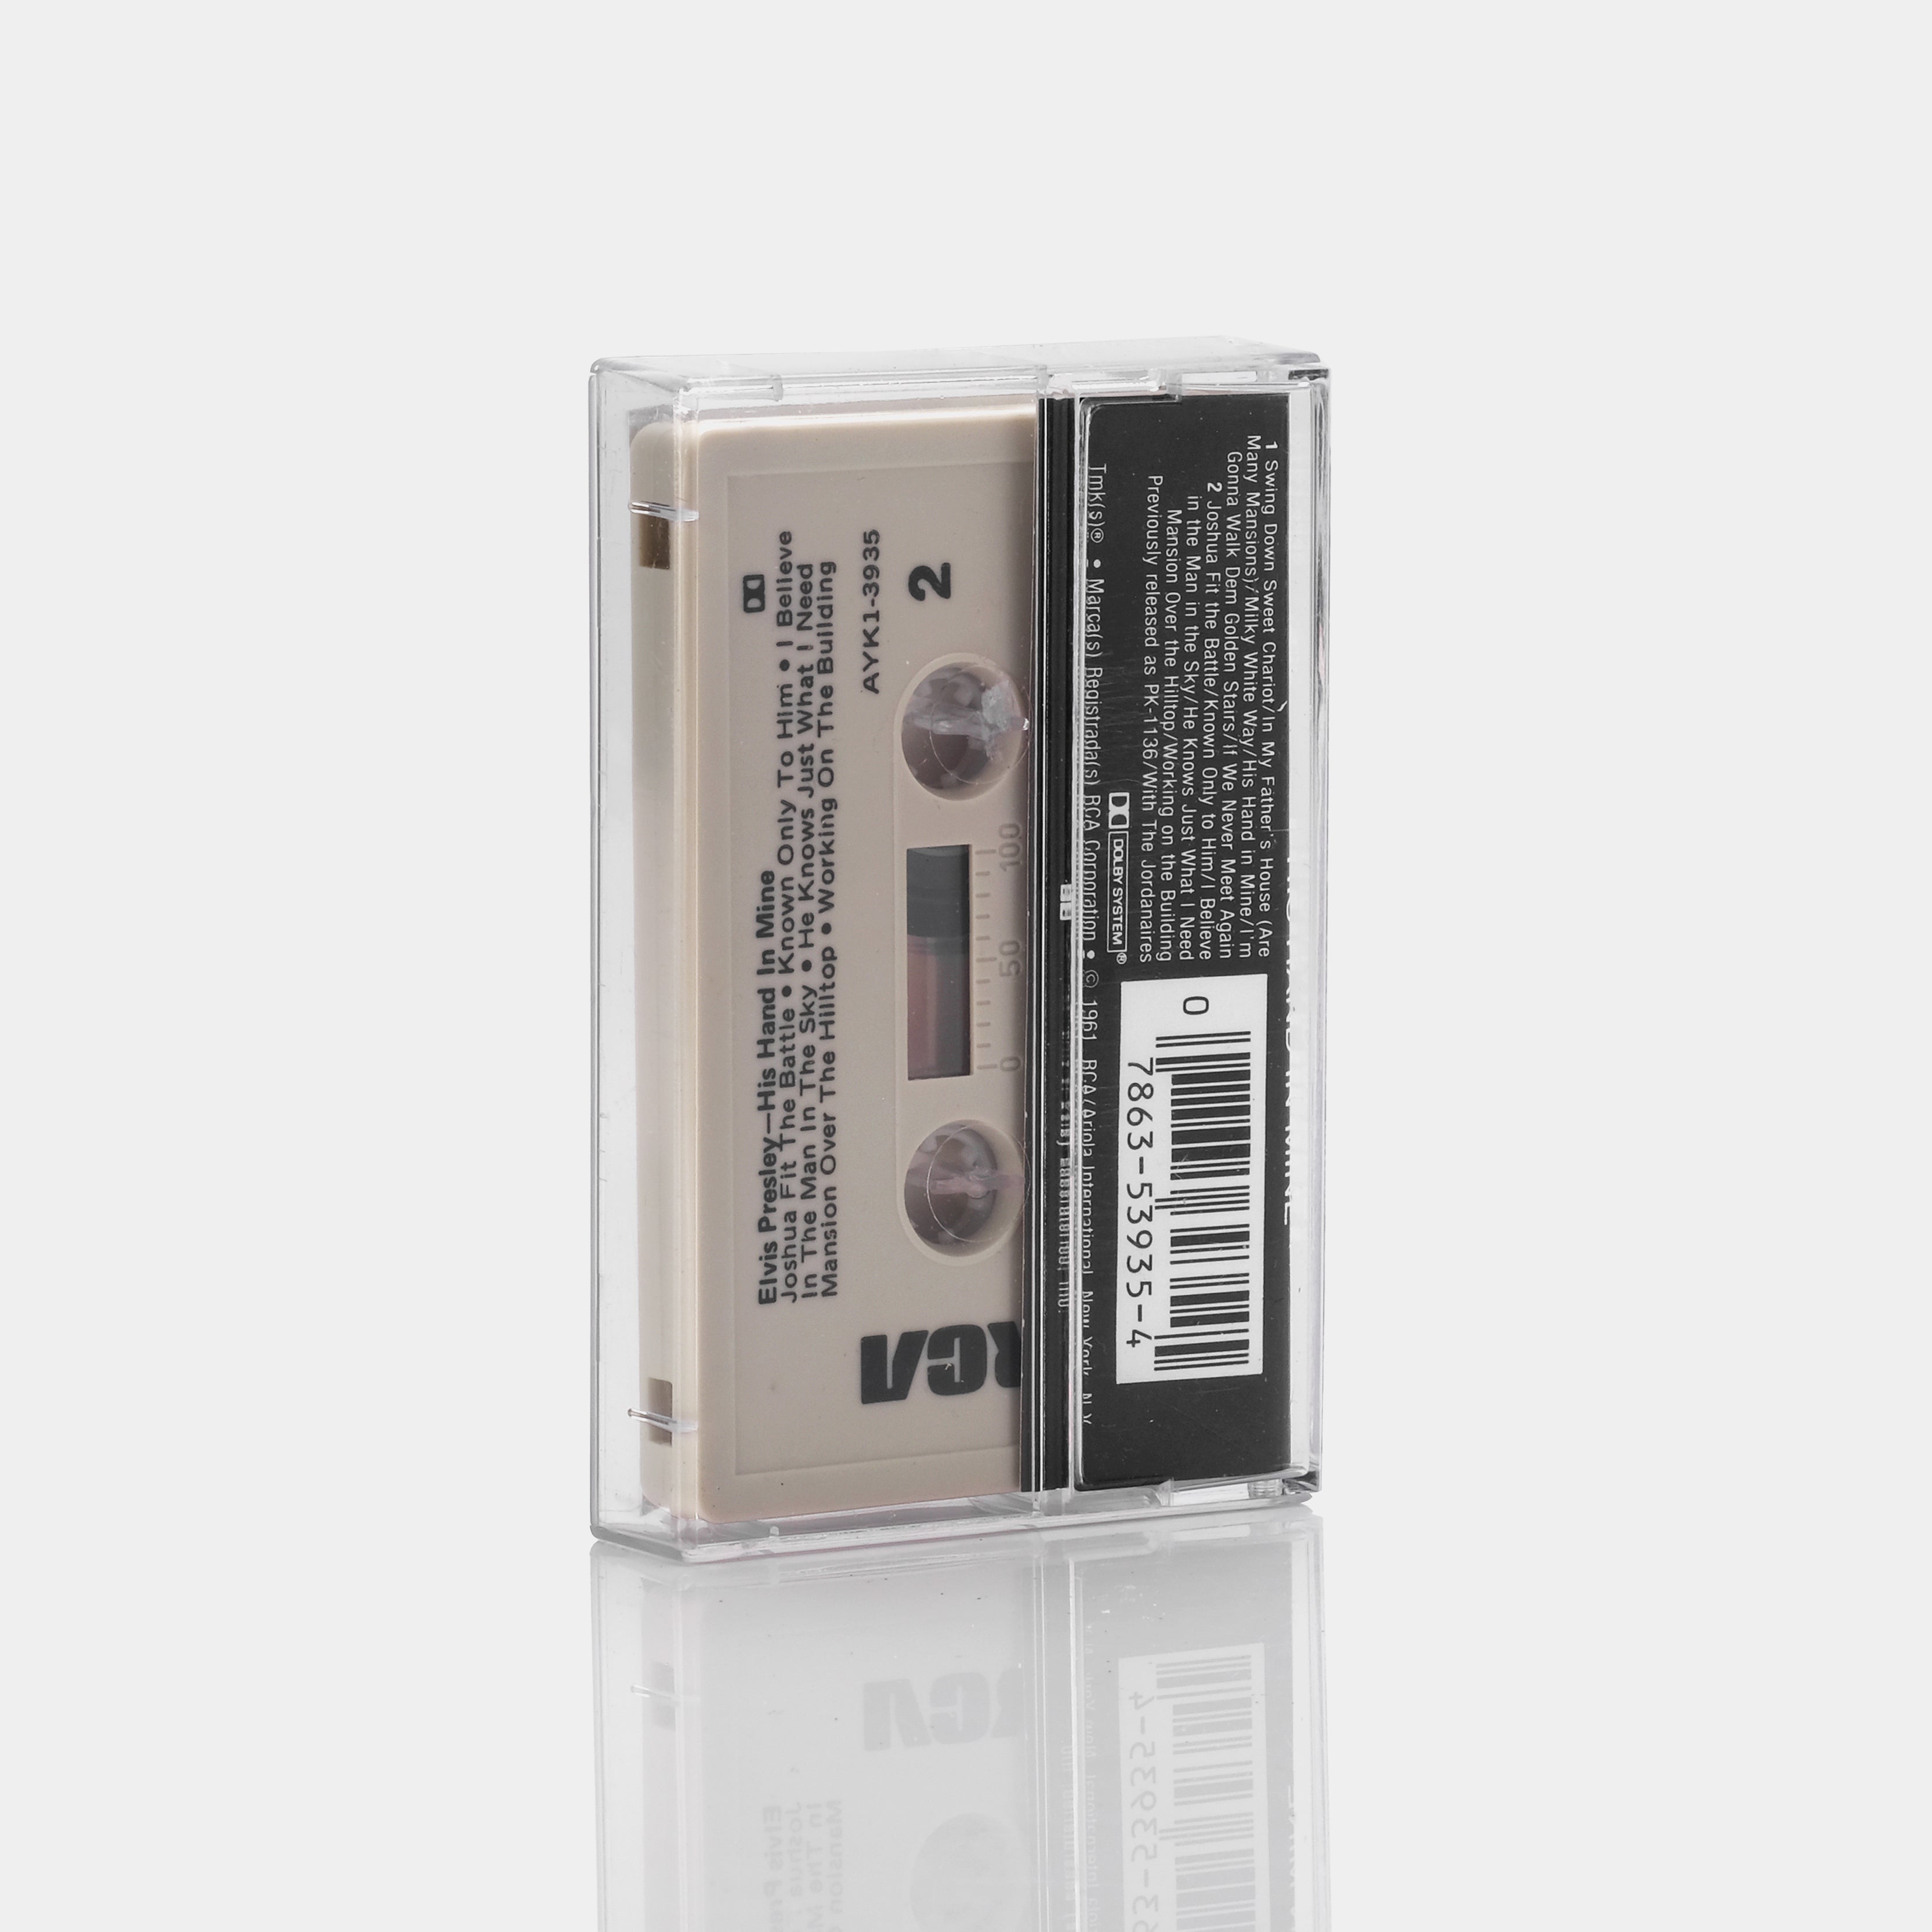 Elvis Presley - His Hand In Mine Cassette Tape